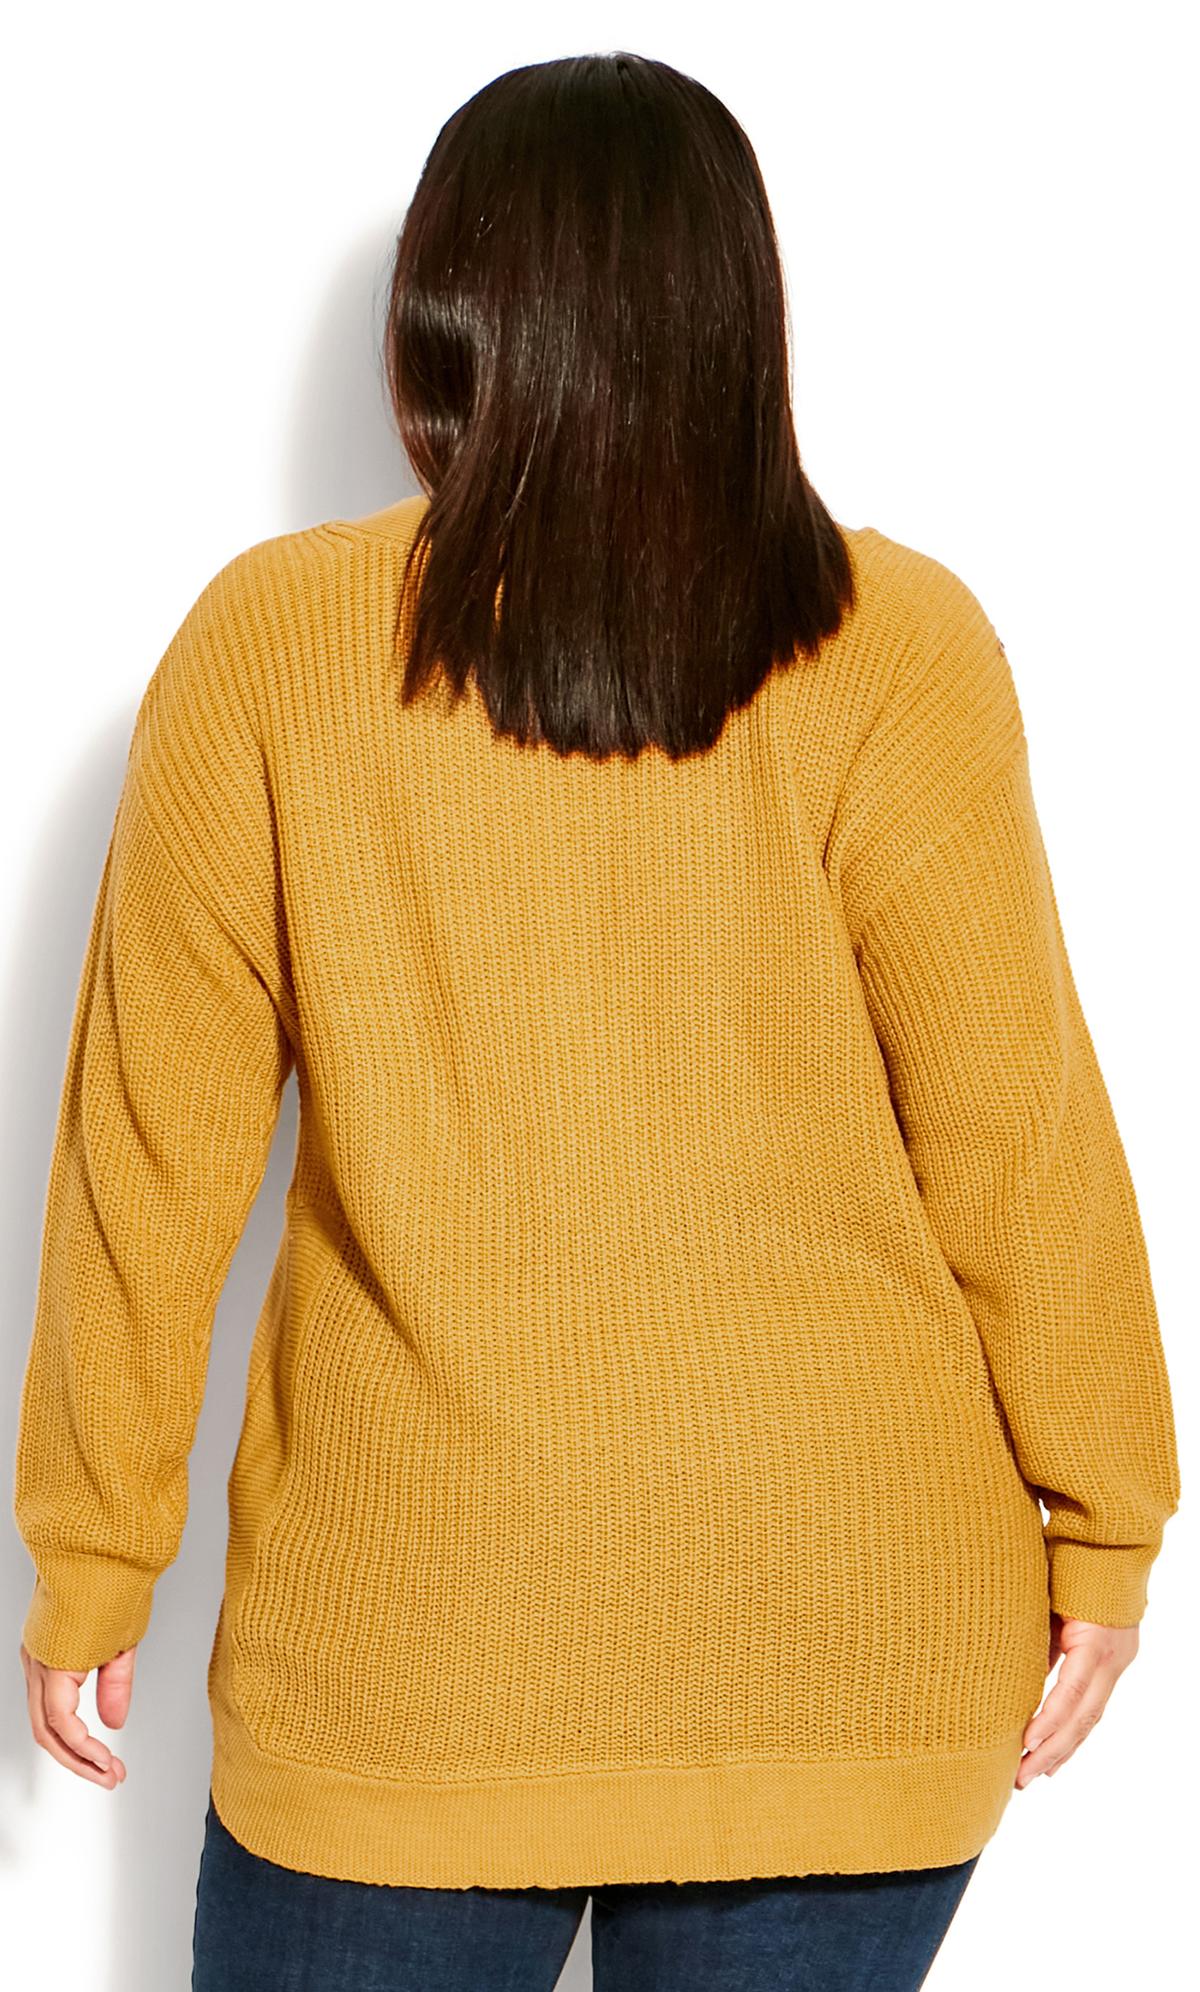 Birdseye Texture Mustard Yellow Sweater 3